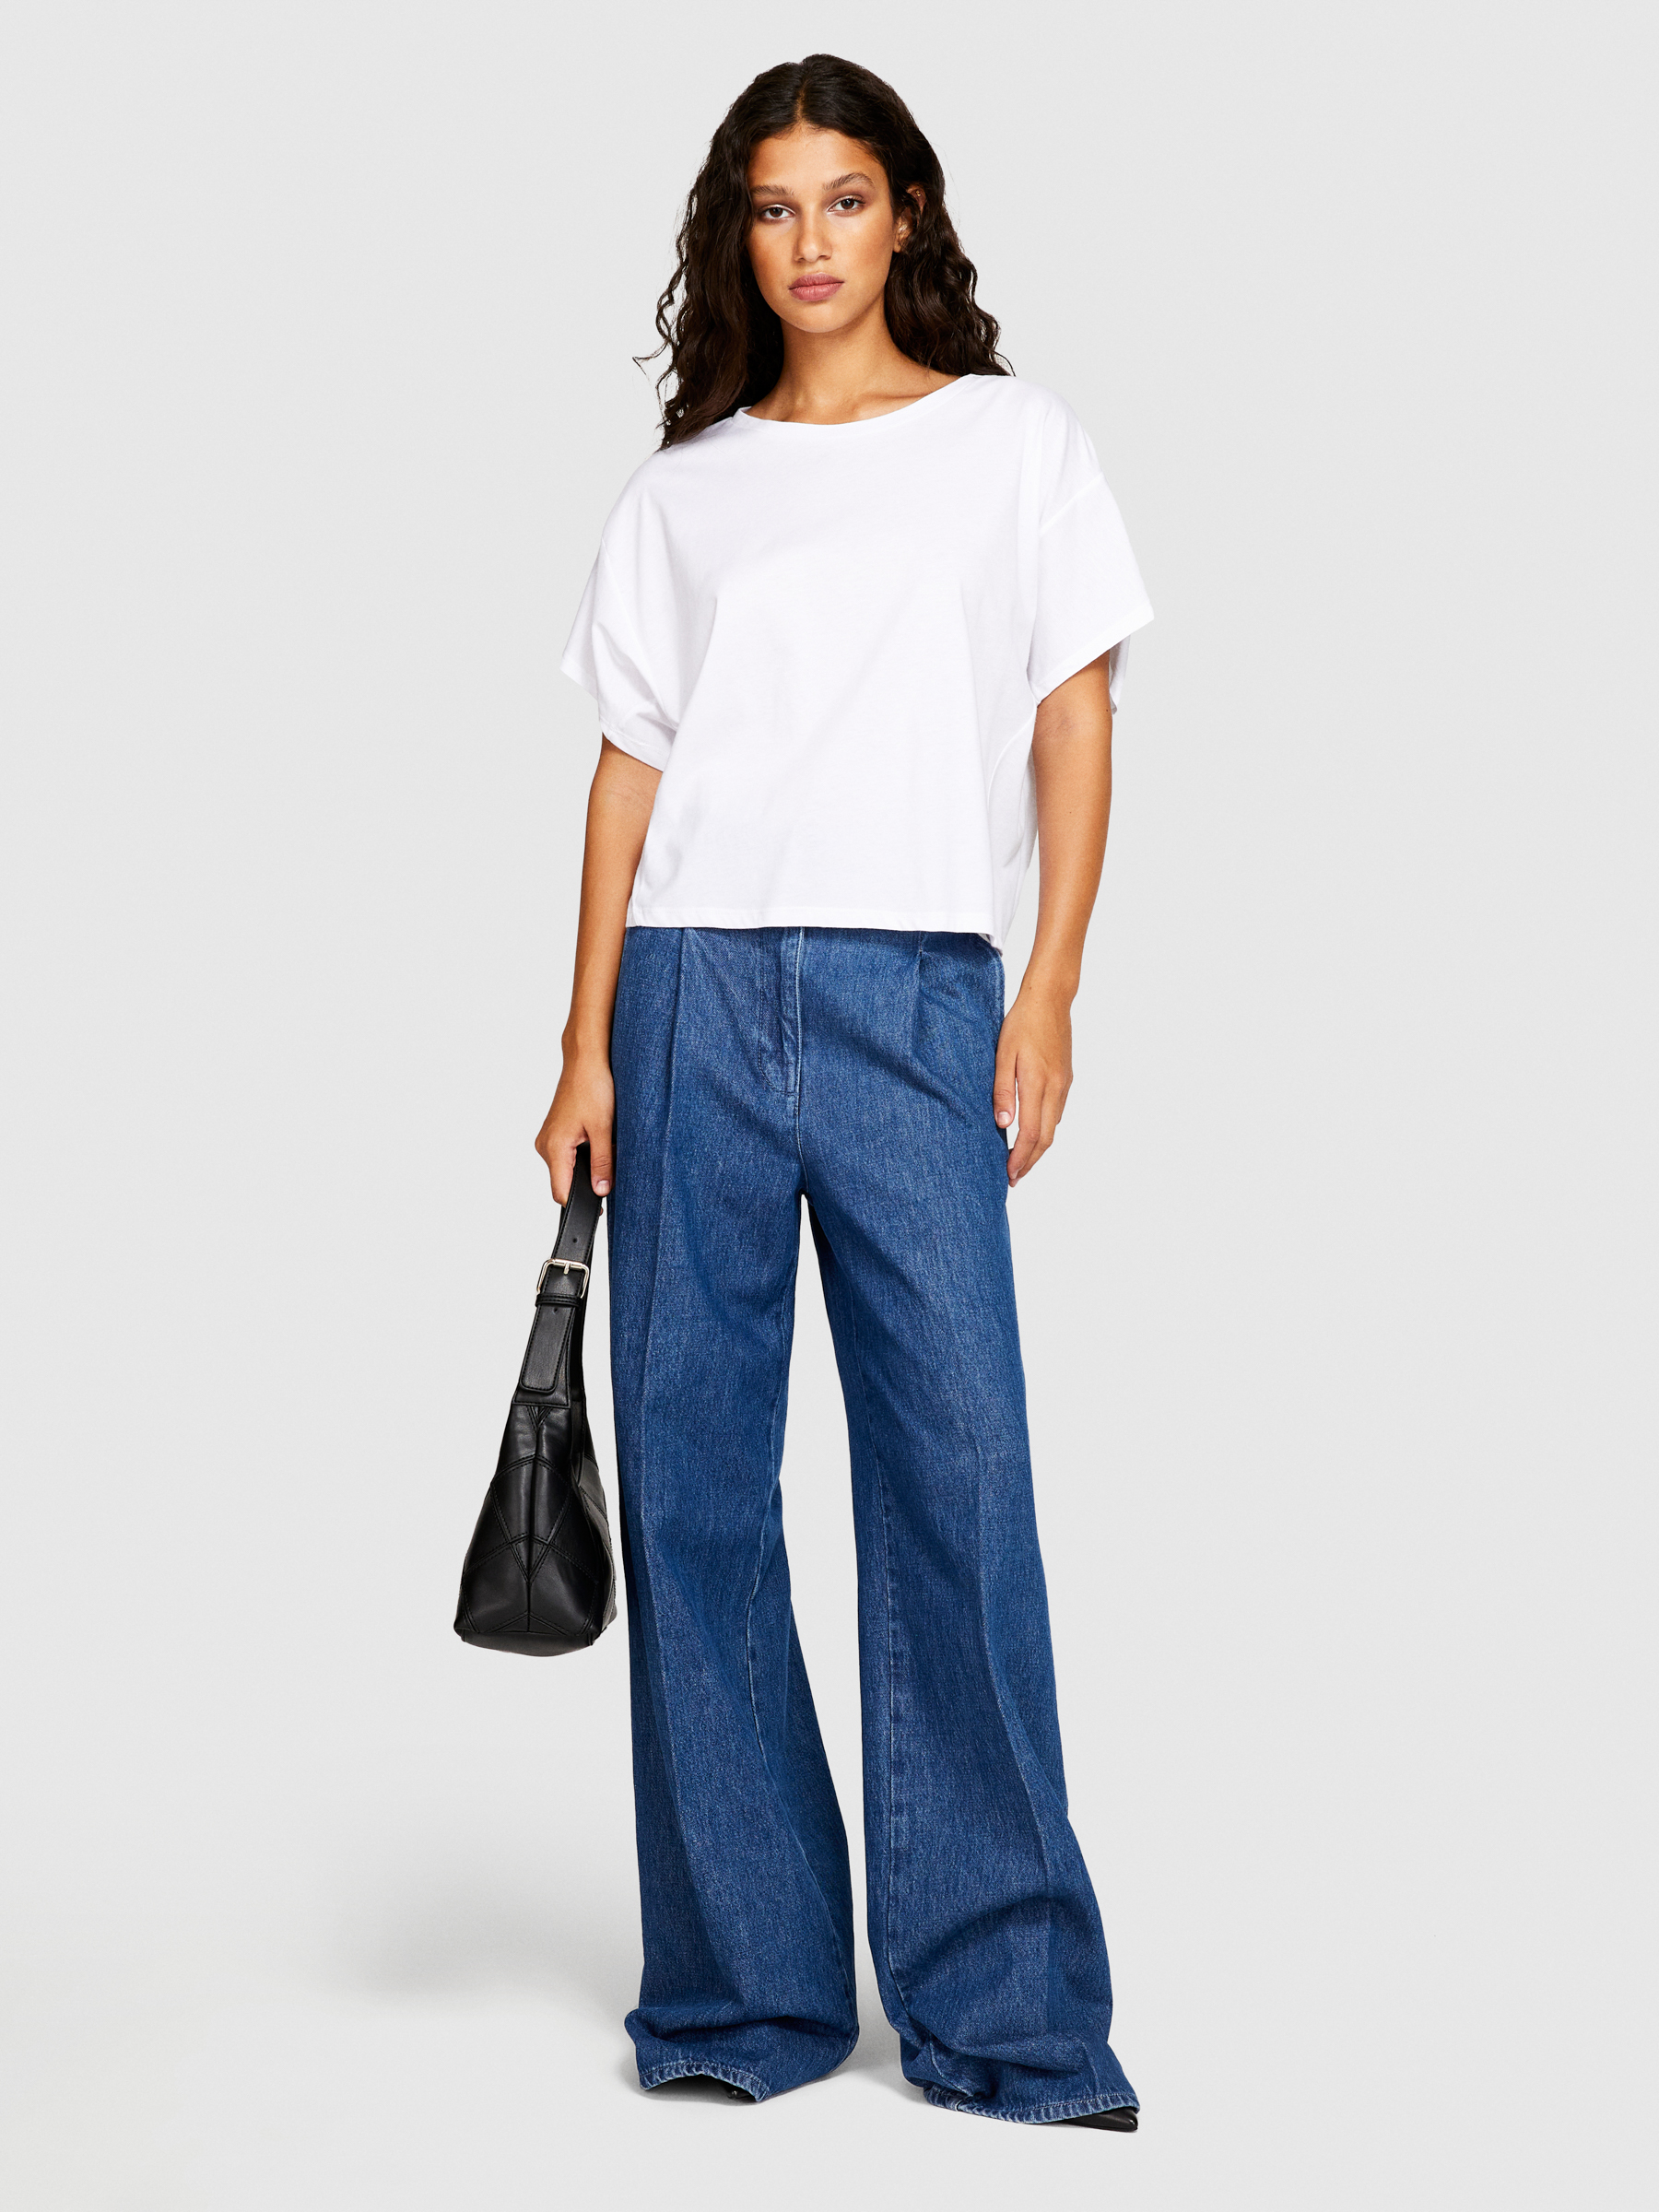 Sisley - Boxy Fit T-shirt, Woman, White, Size: XS